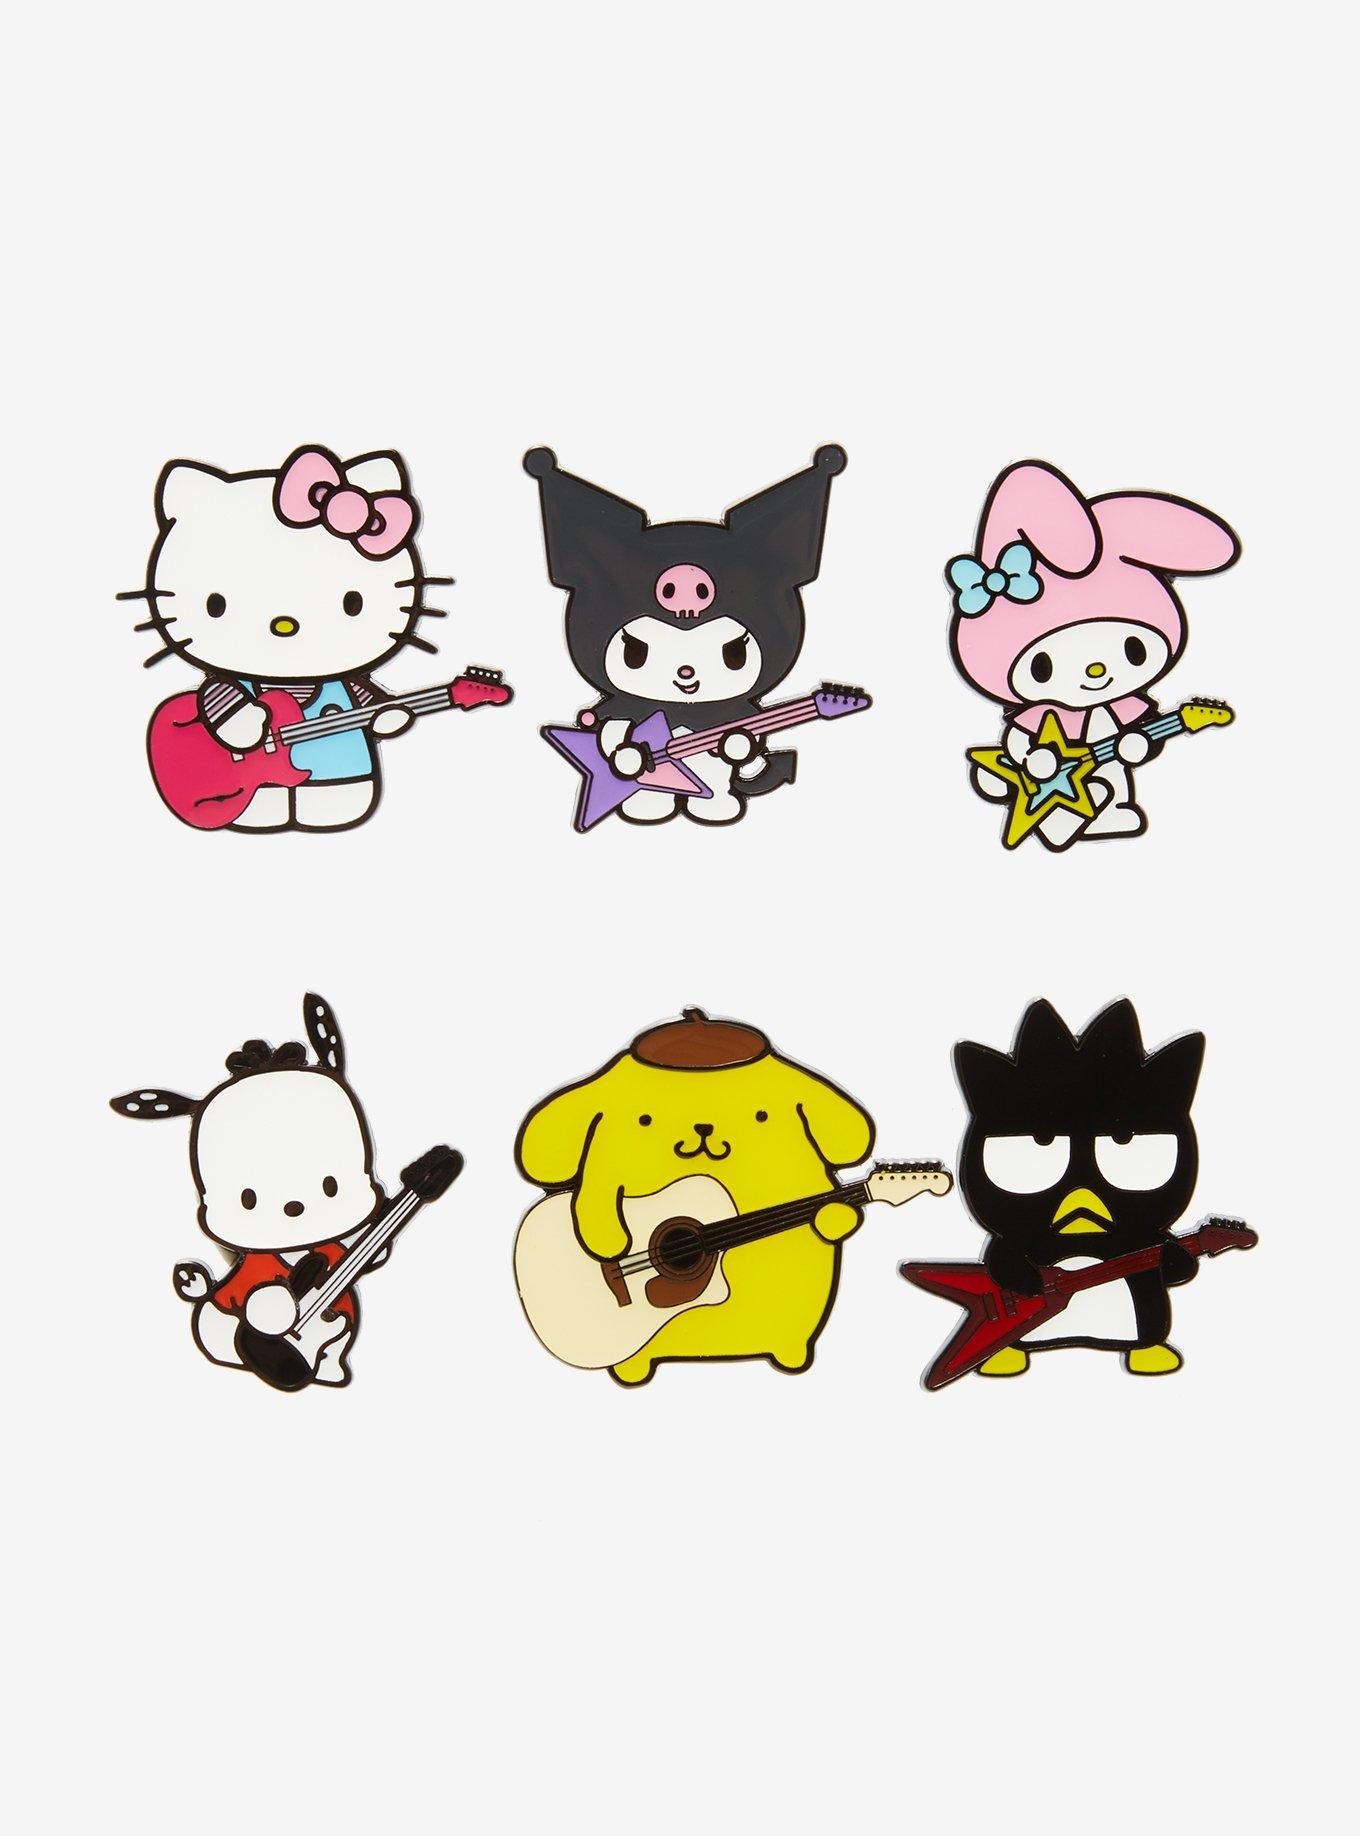 tokidoki x Hello Kitty and Friends Series 2 Enamel Pin Blind Box – Blind  Box Empire